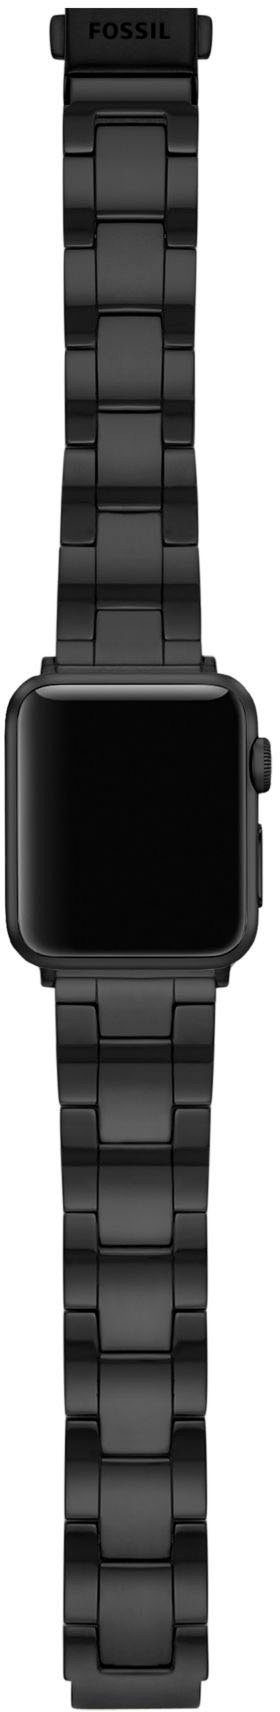 Apple ideal als auch Strap, Geschenk S380013, Smartwatch-Armband Fossil